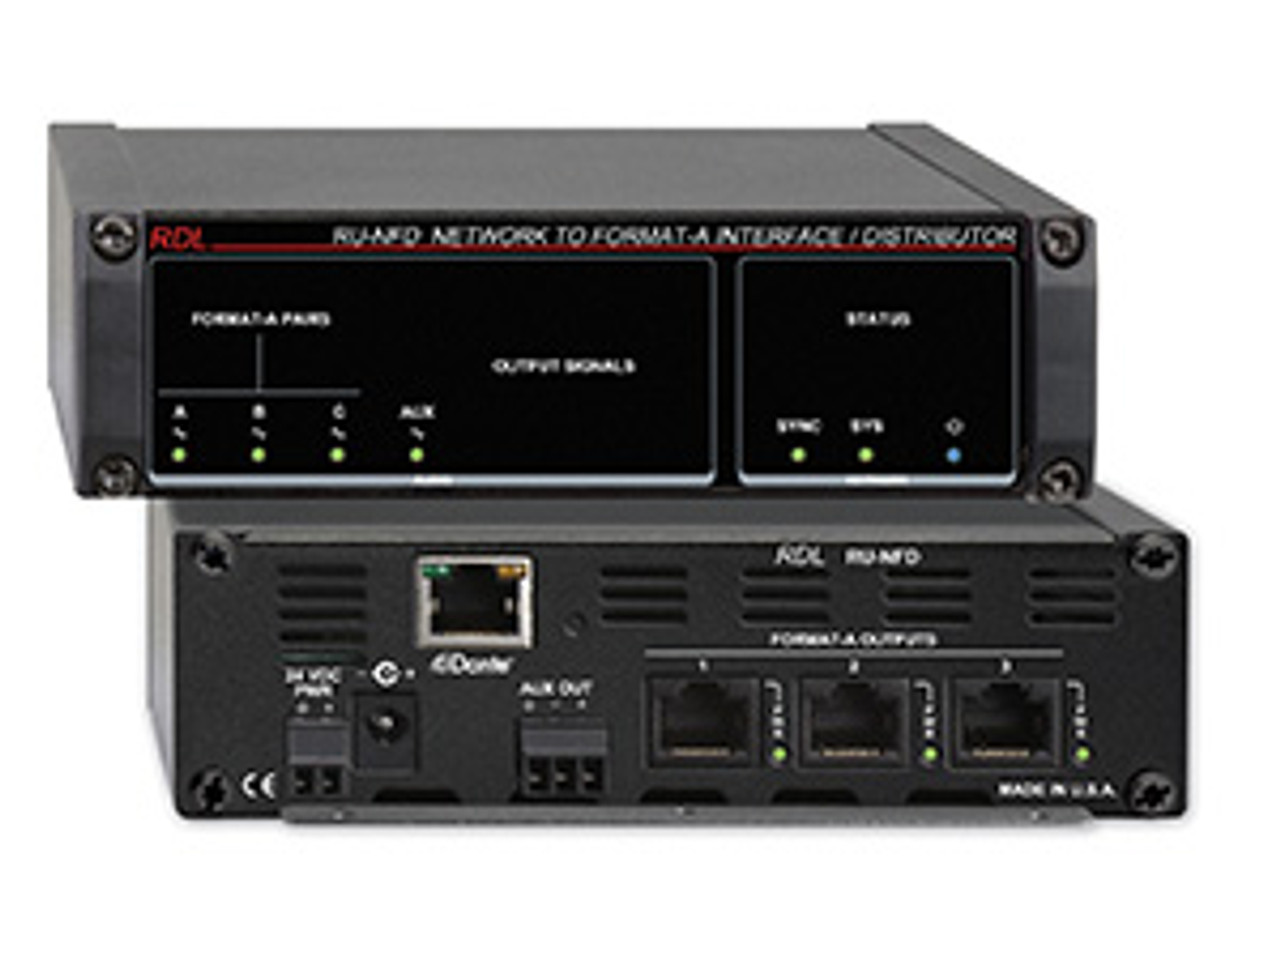 RDL RU-NFD Network to Format-A Interface/Distributor (RU-NFD)